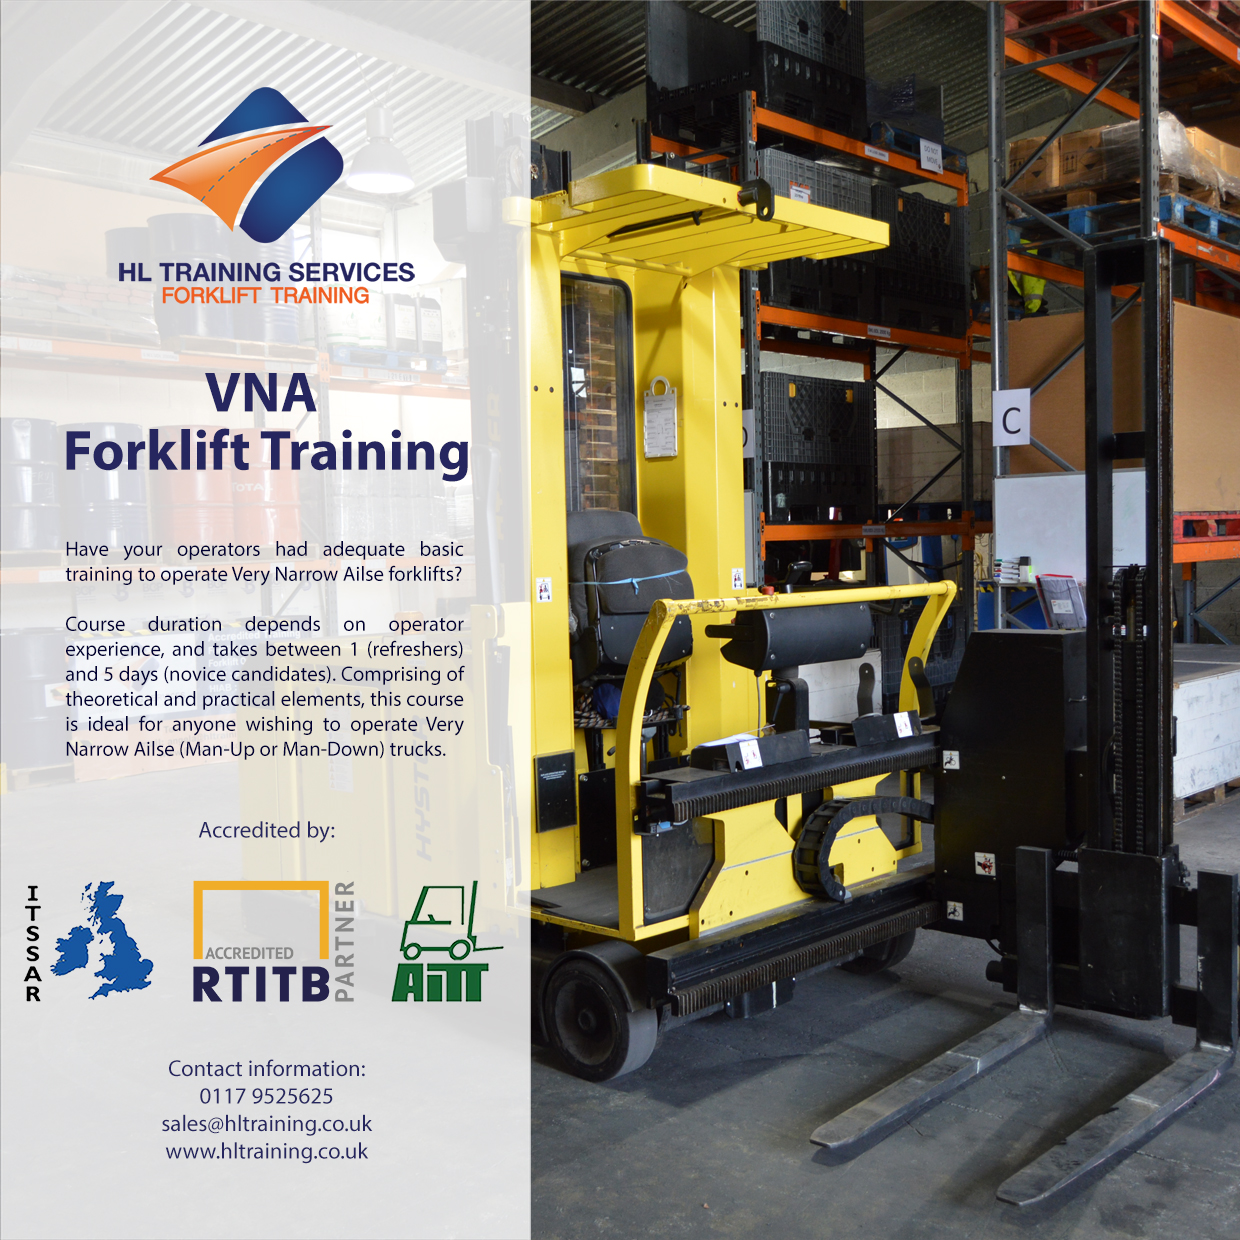 Very Narrow Ailse (VNA) Forklift Training